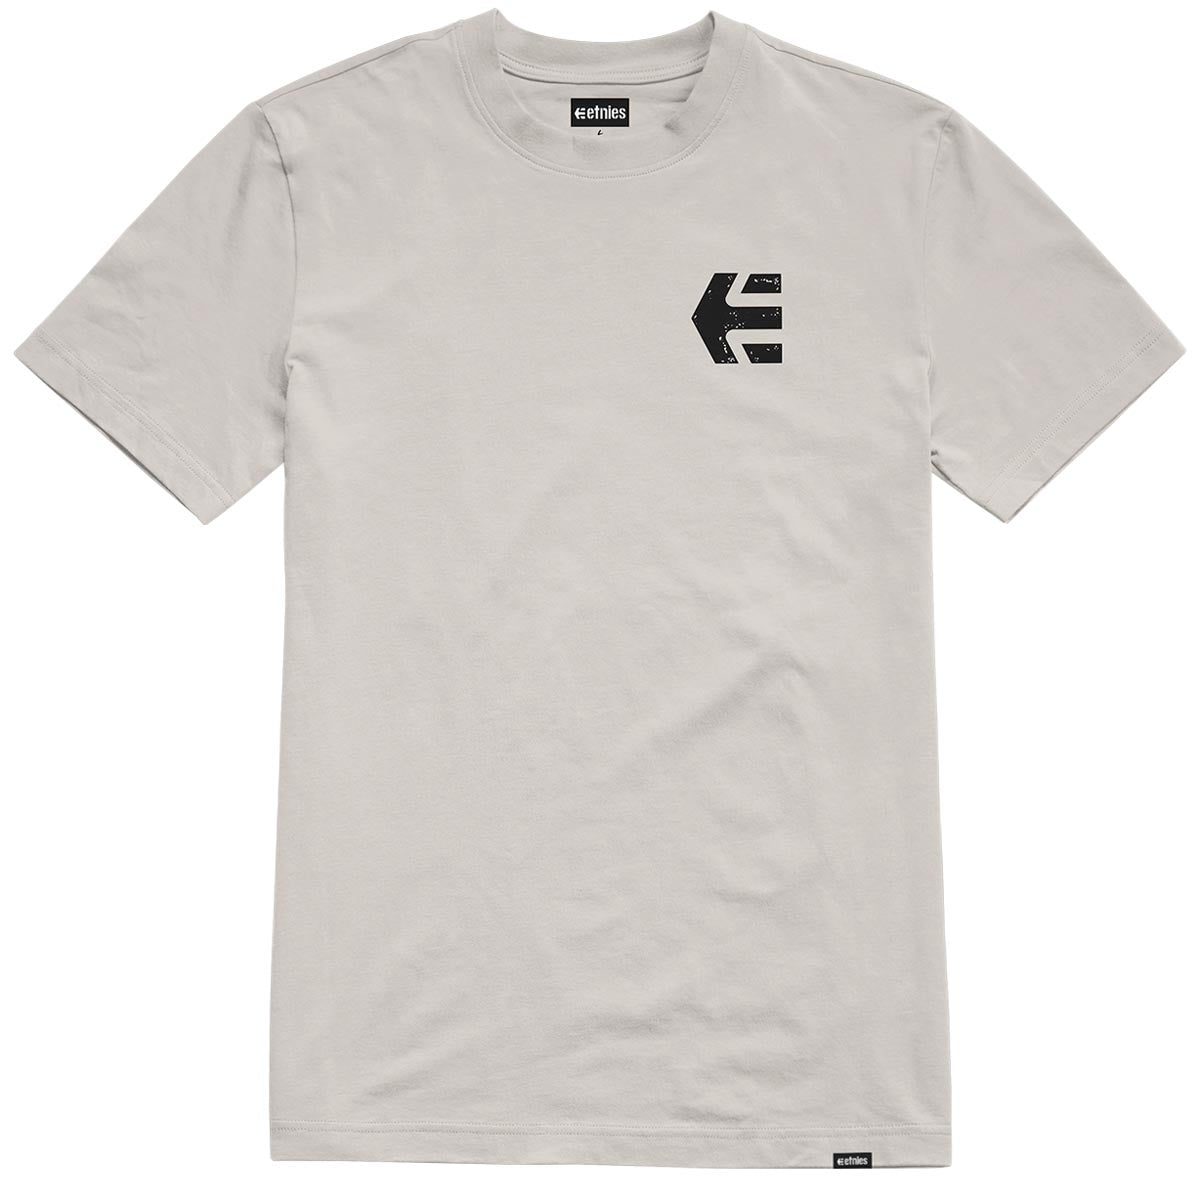 Etnies Skate Co T-Shirt - Natural image 2